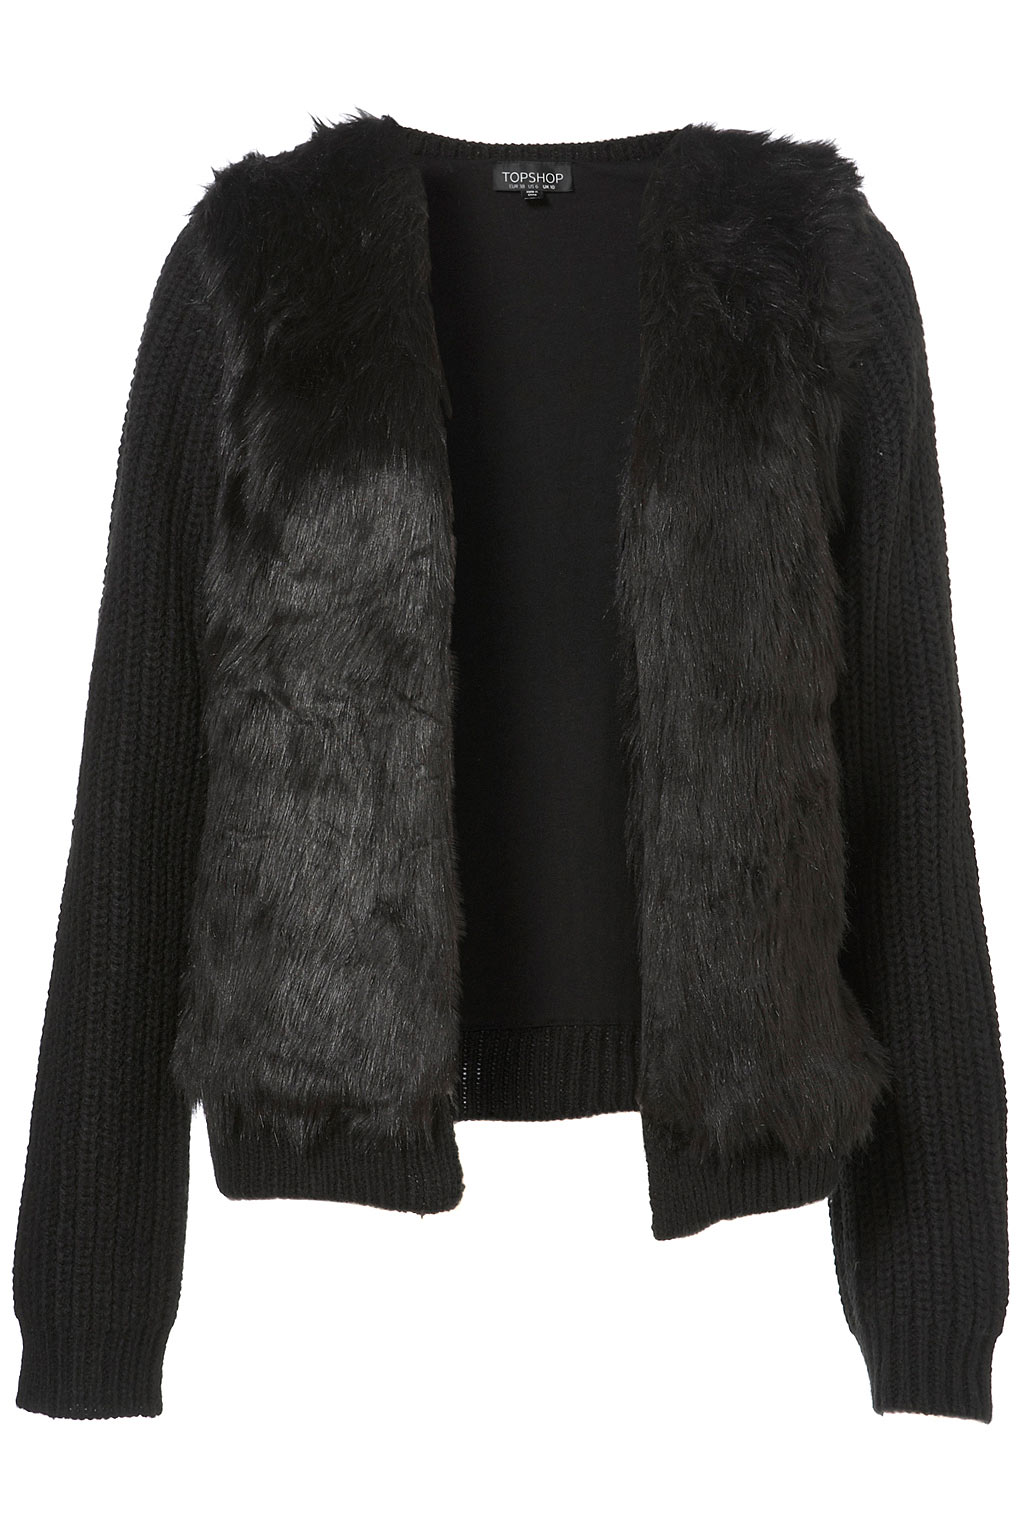 Lyst Topshop Knitted Faux Fur Trim Cardigan In Black